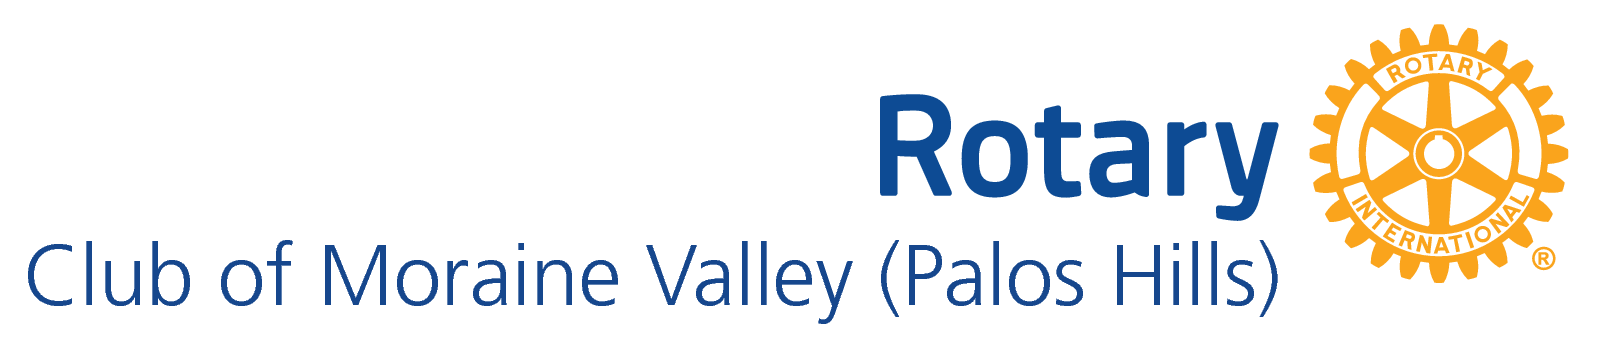 Rotary Club of Moraine Valley (Palos Hills)